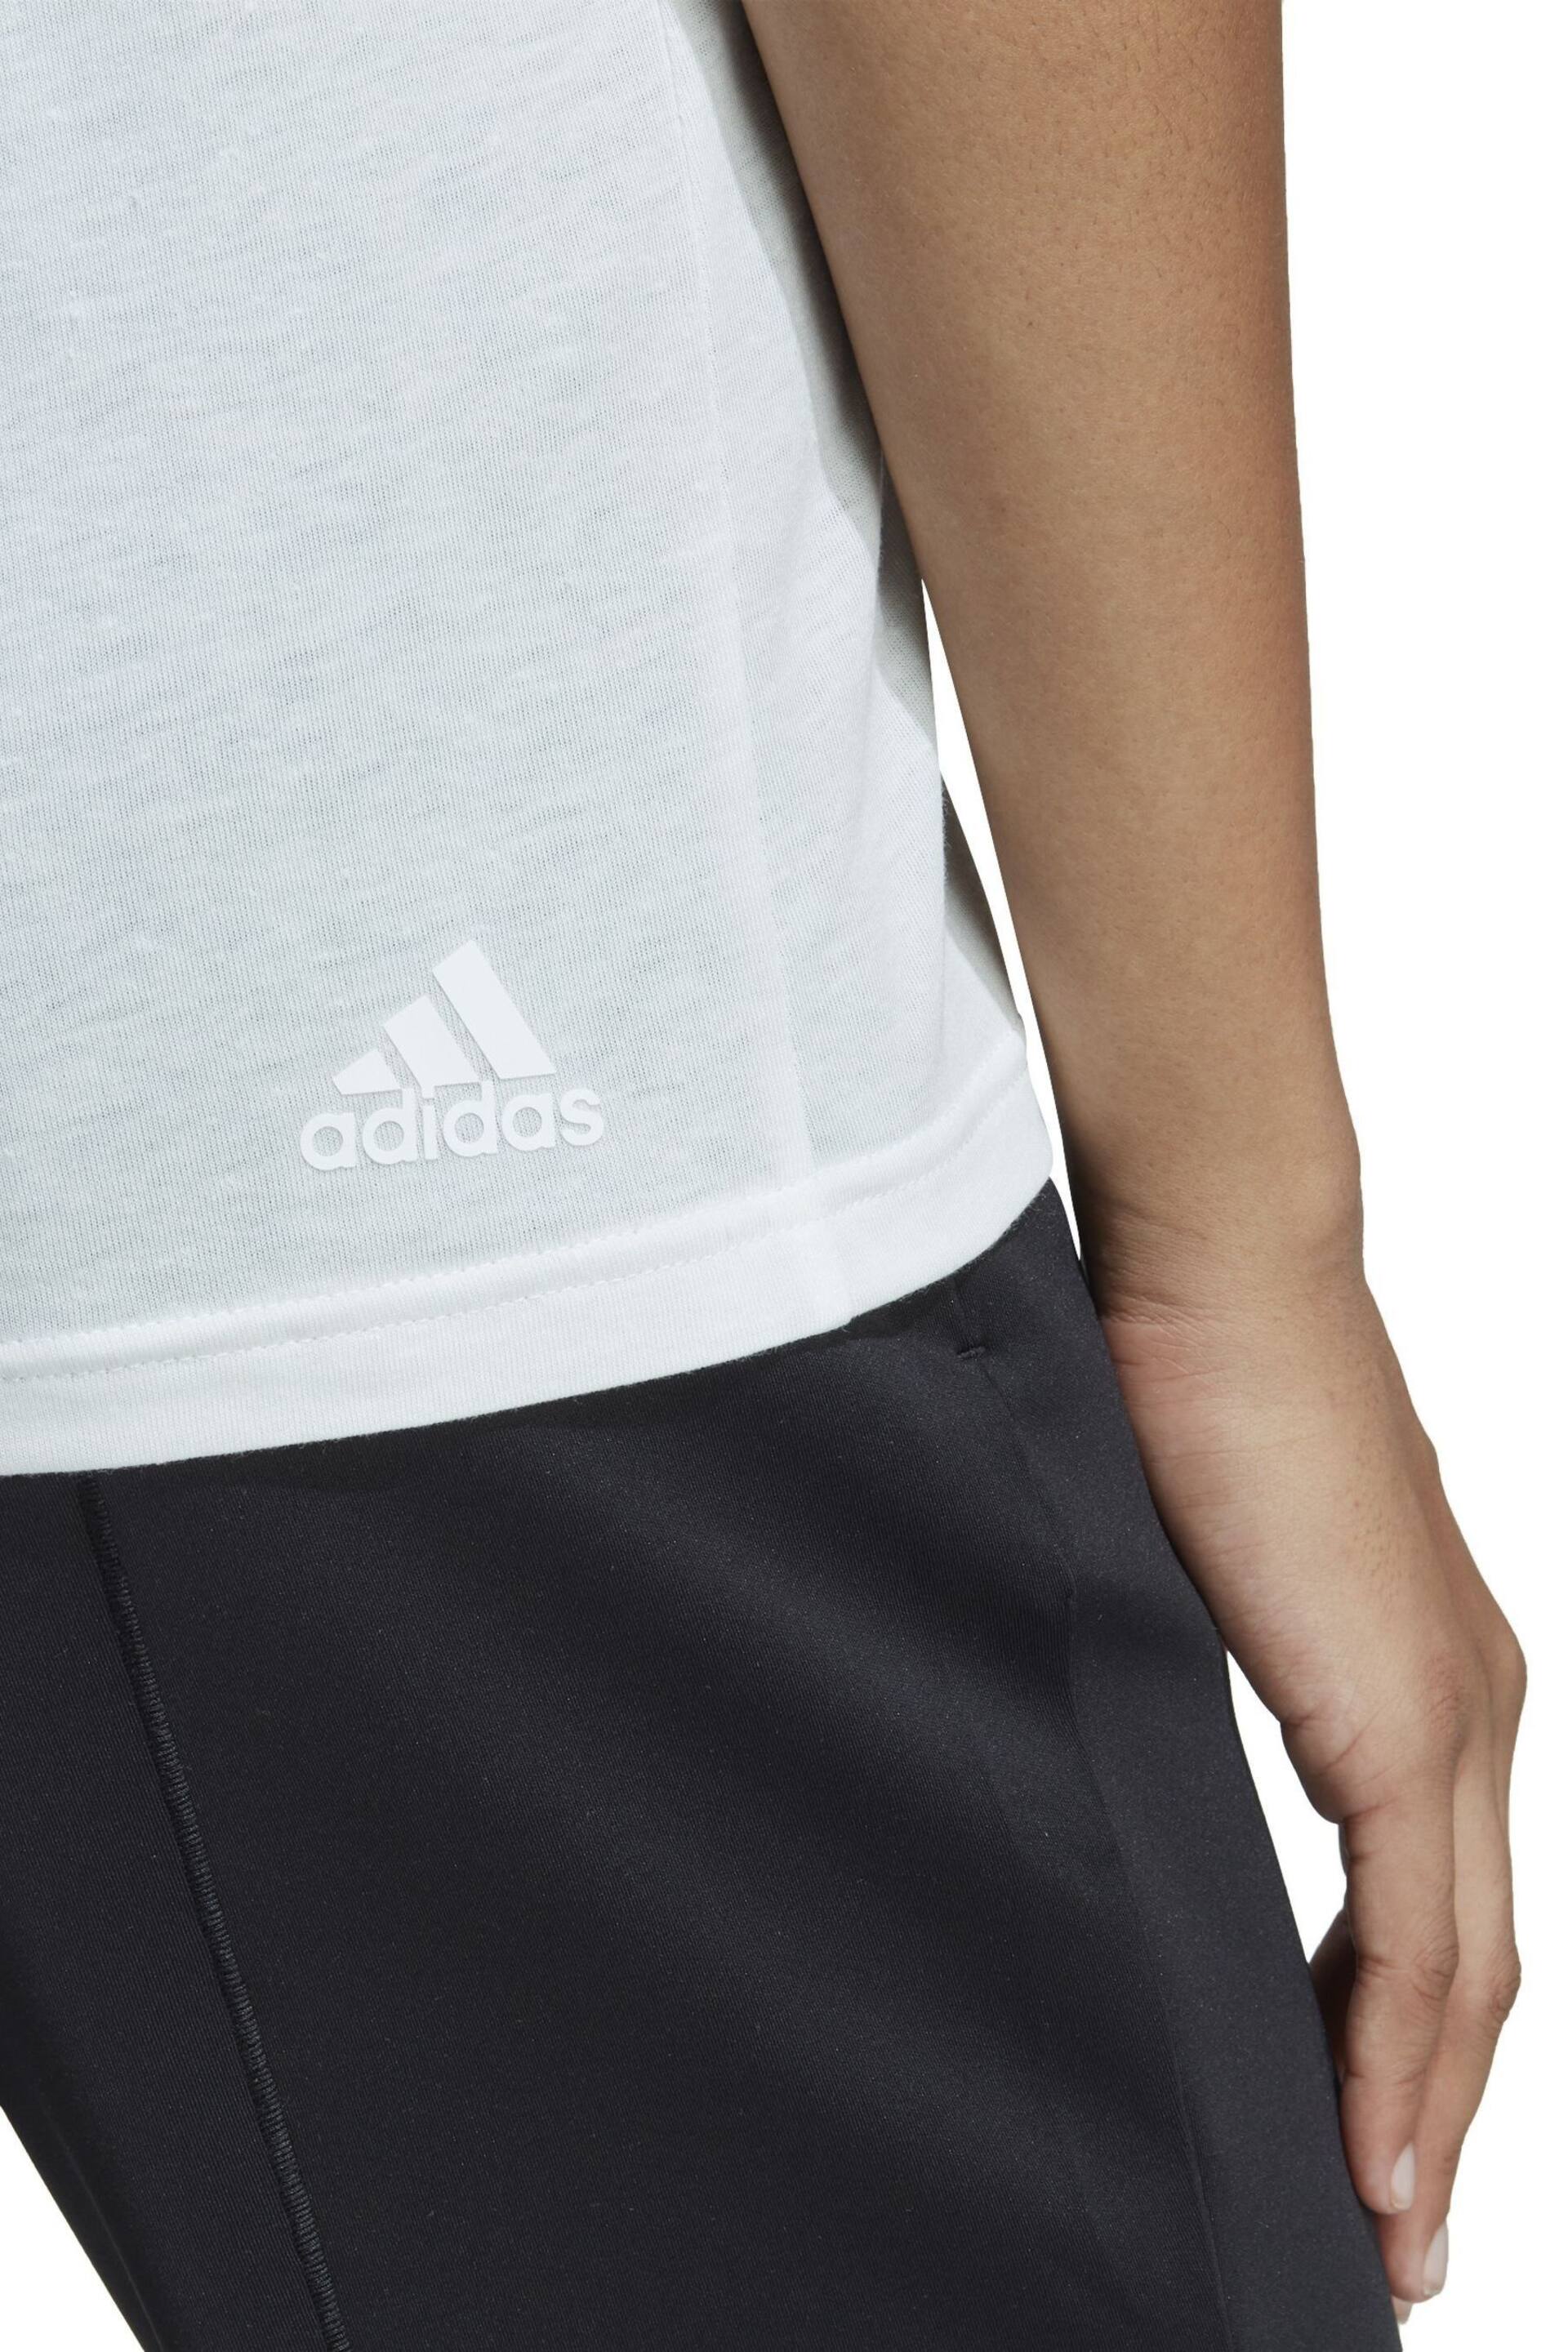 adidas White Sportswear Future Icons Winners 3.0 Tank Top - Image 6 of 7